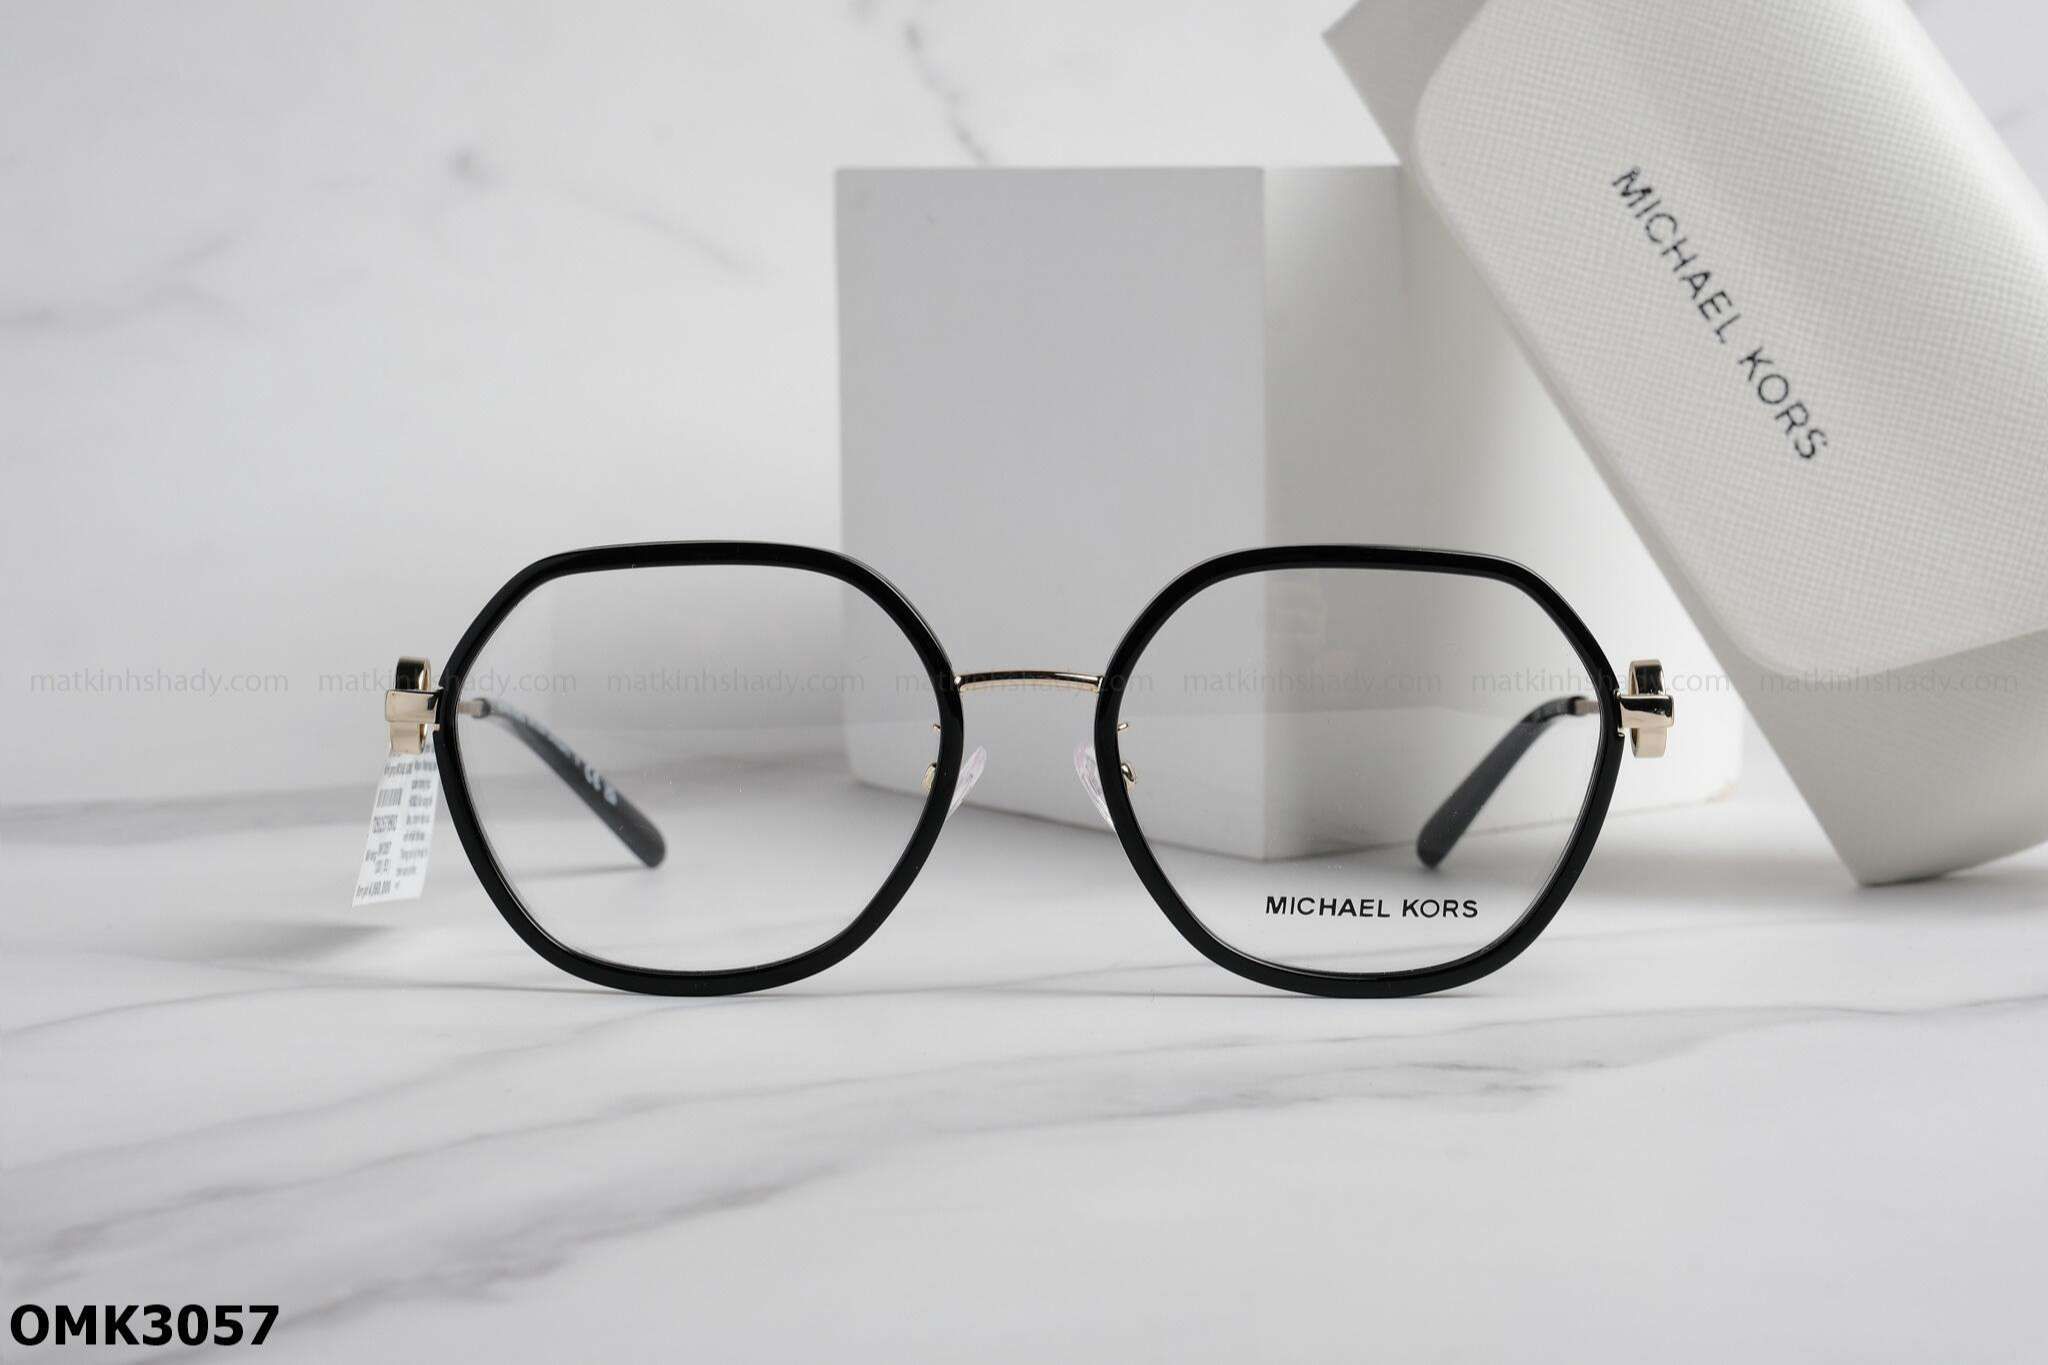  Michael Kors Eyewear - Glasses - OMK3057 